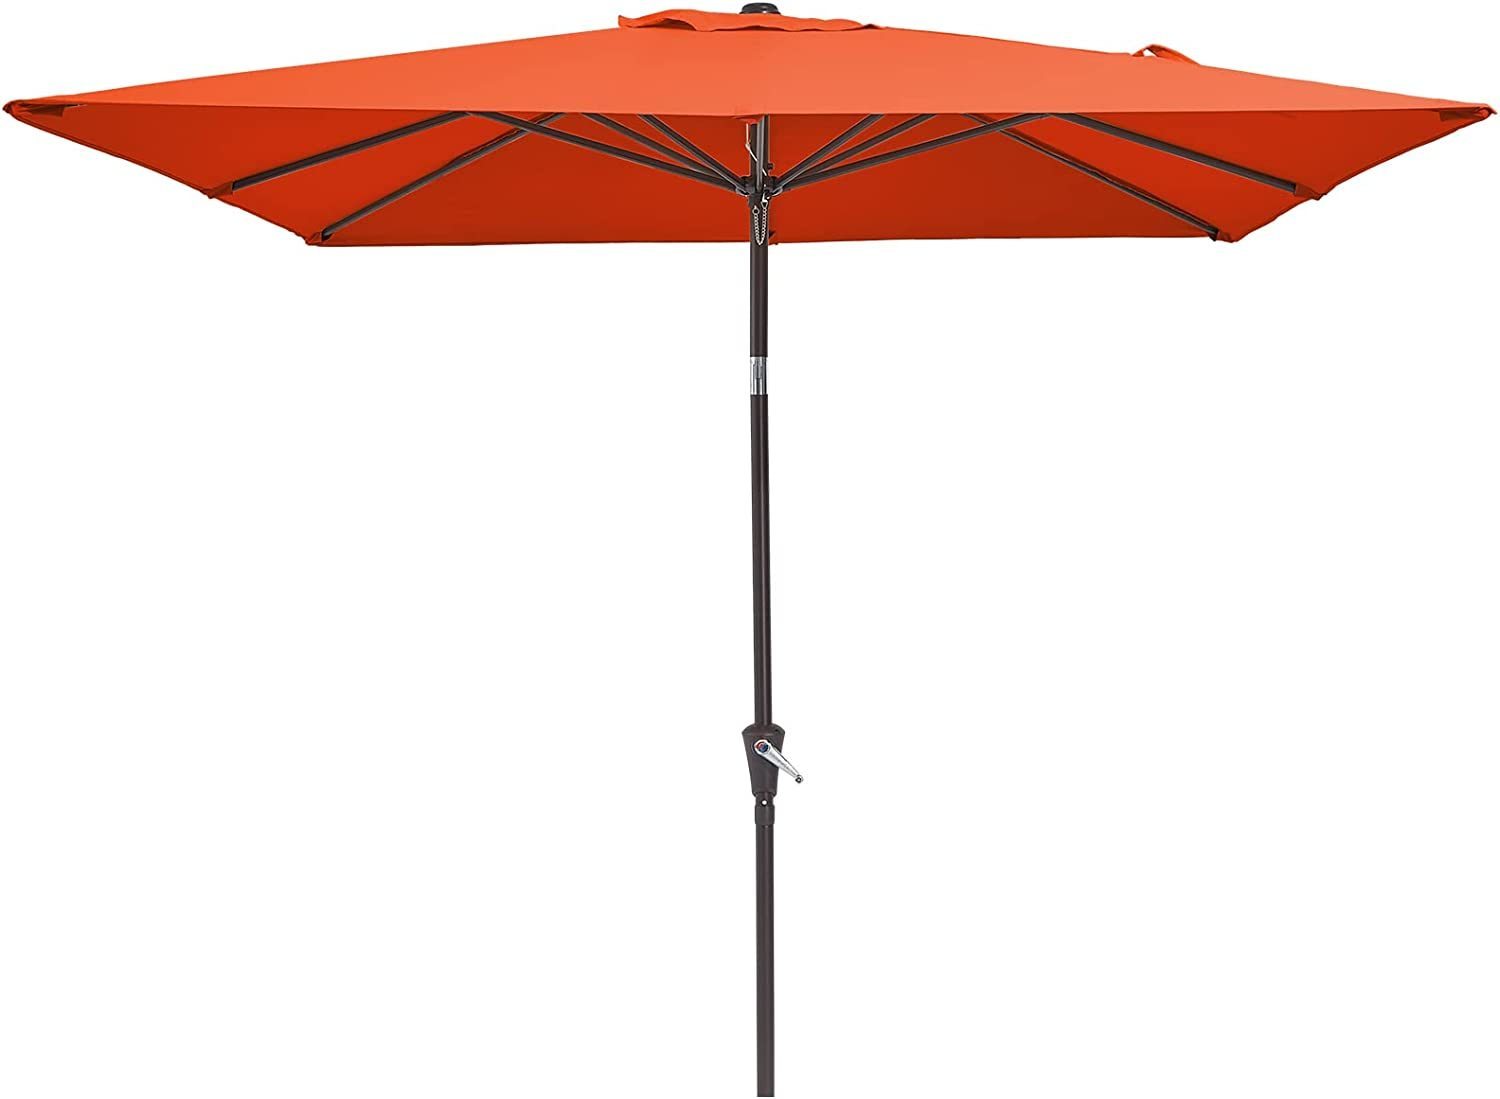 Rectangular-Patio-Umbrella-6.5-ft.-x-10-ft.-with-Tilt,-Crank-and-6-Sturdy-Ribs-ORANGE-Umbrellas-&-Sunshades